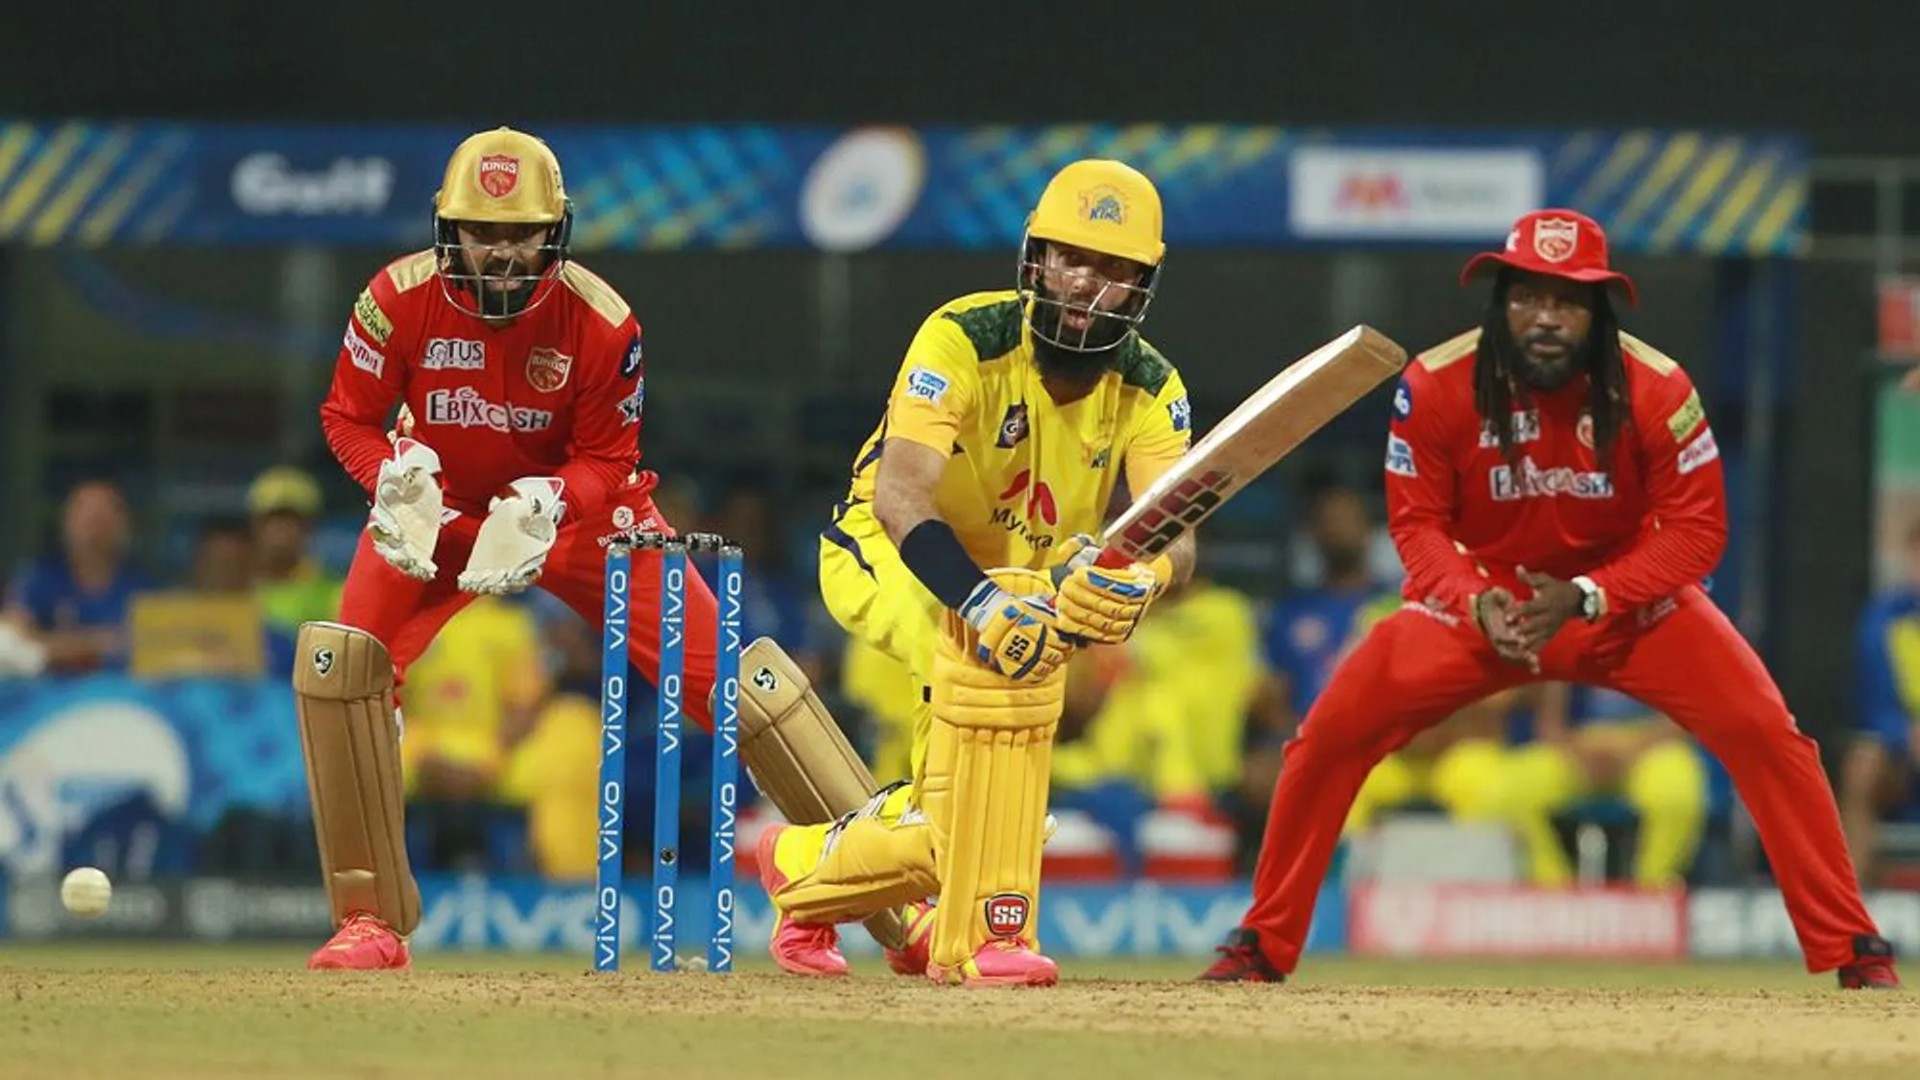 Moeen Ali plays a shot. (Image: BCCI/IPL)